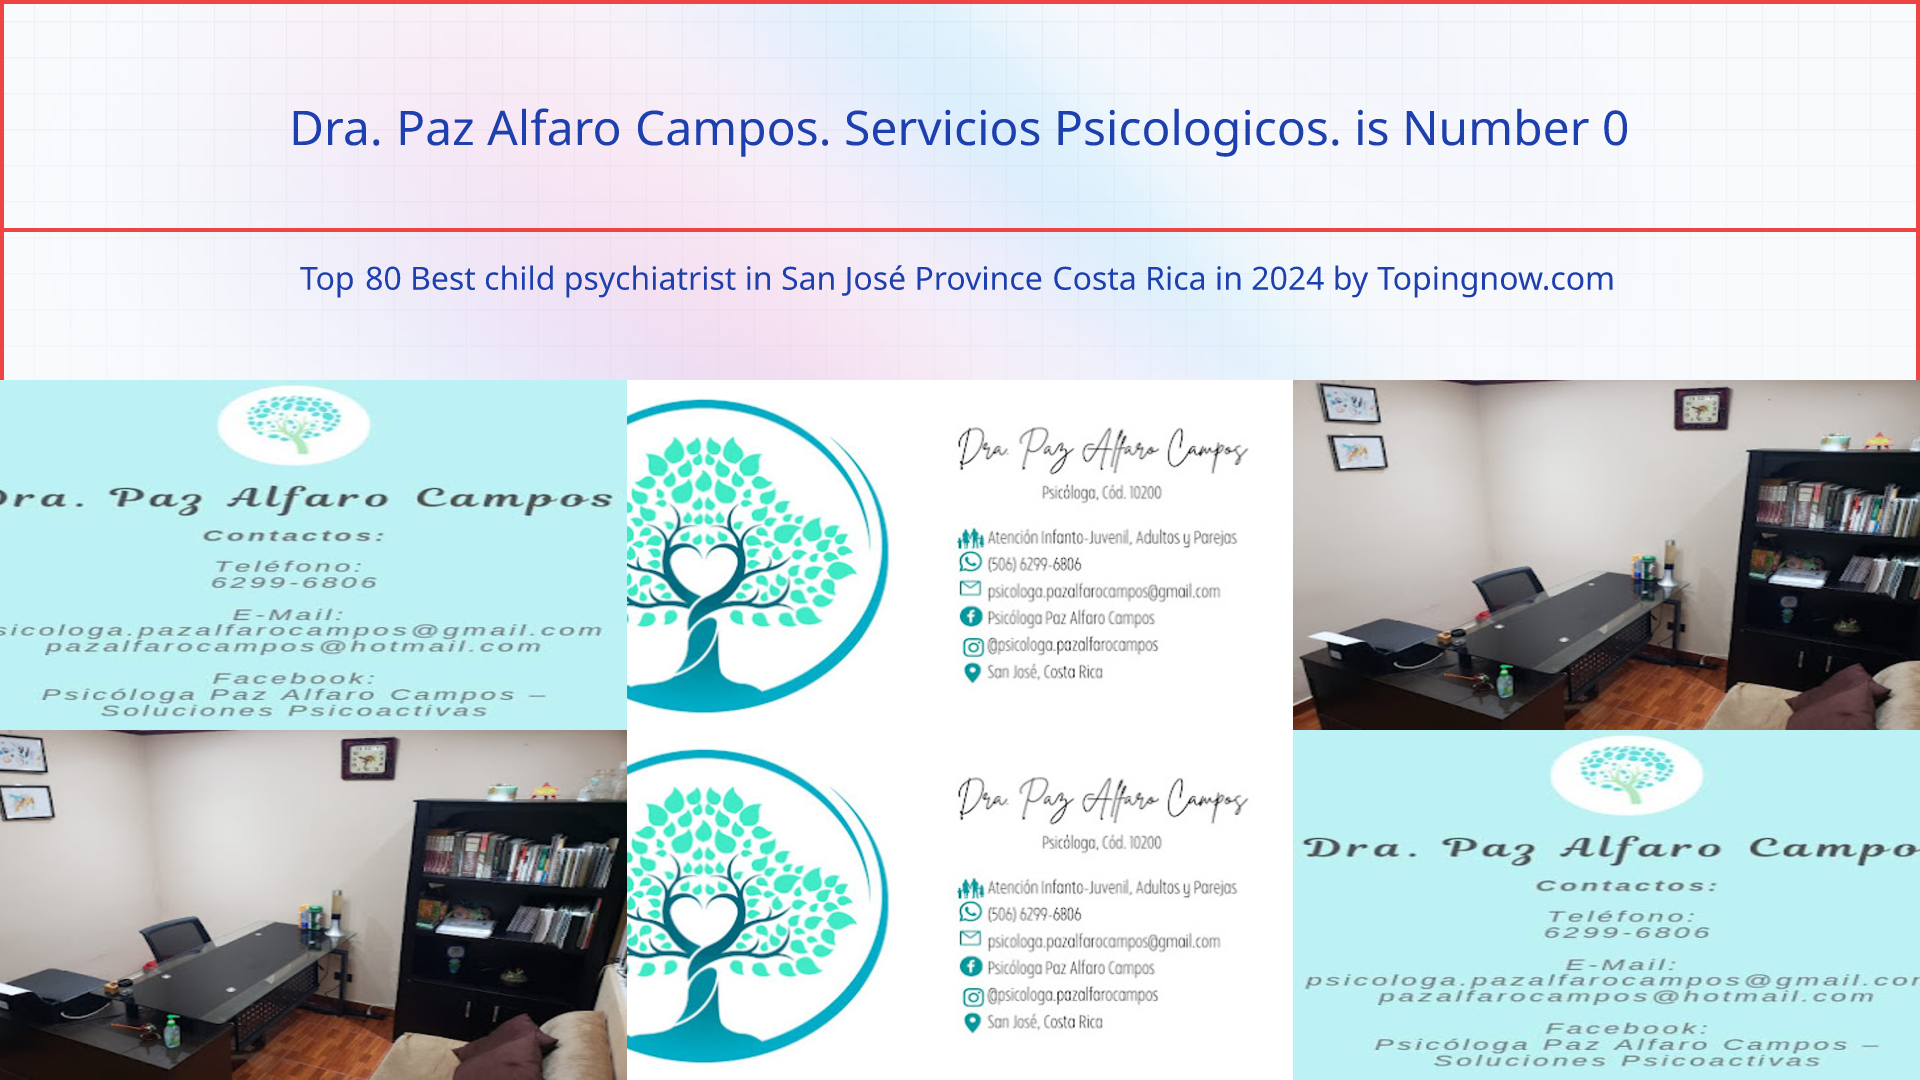 Dra. Paz Alfaro Campos. Servicios Psicologicos.: Top 80 Best child psychiatrist in San José Province Costa Rica in 2024